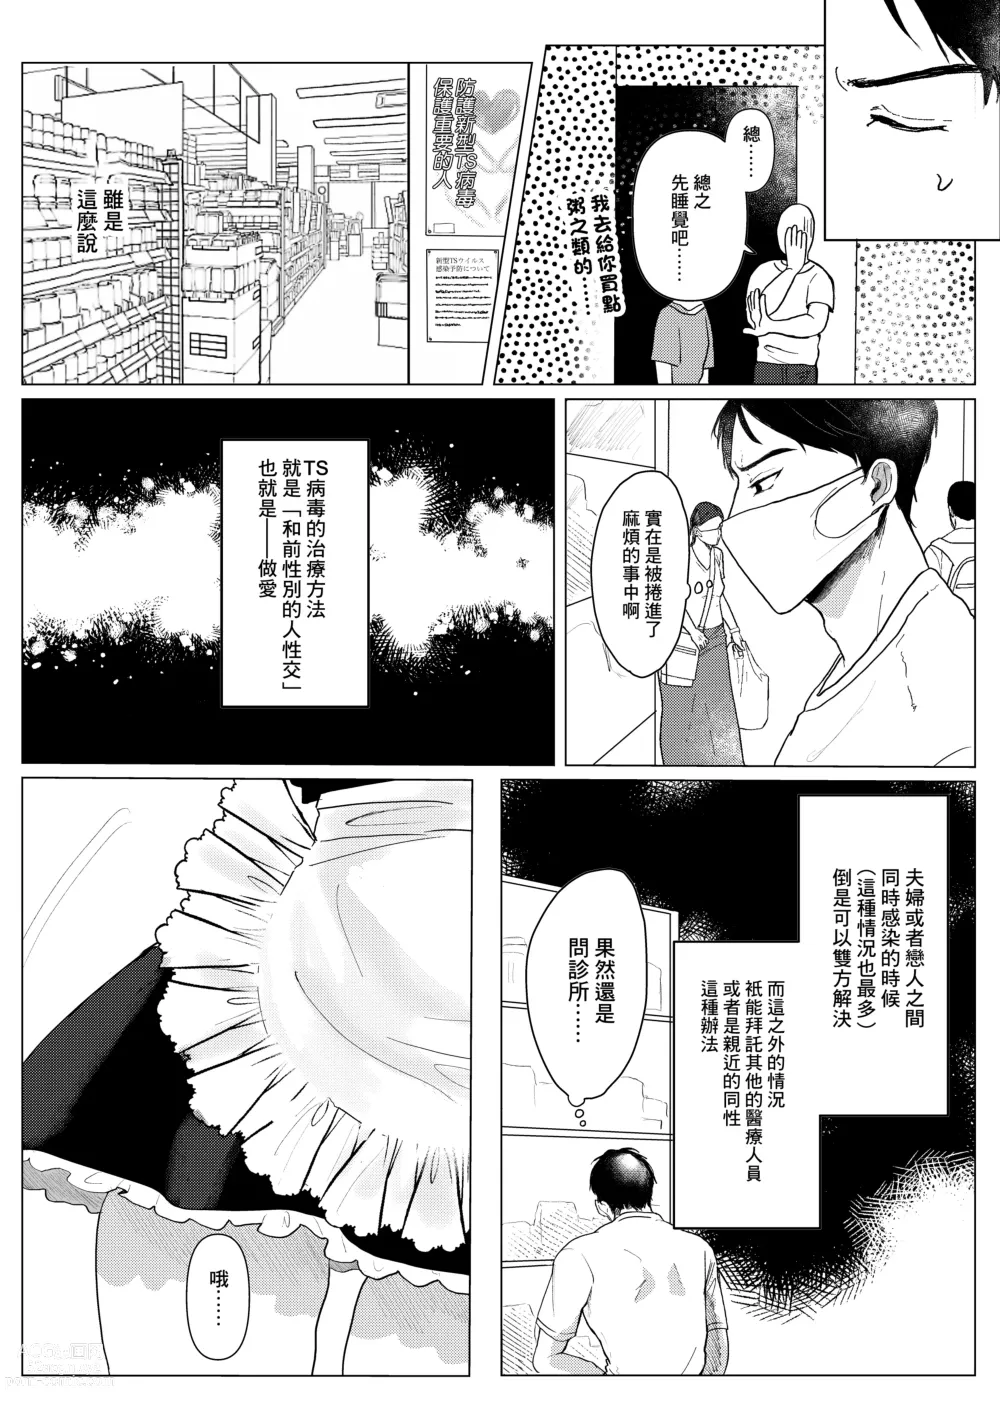 Page 5 of doujinshi Shingata!? TS Virus